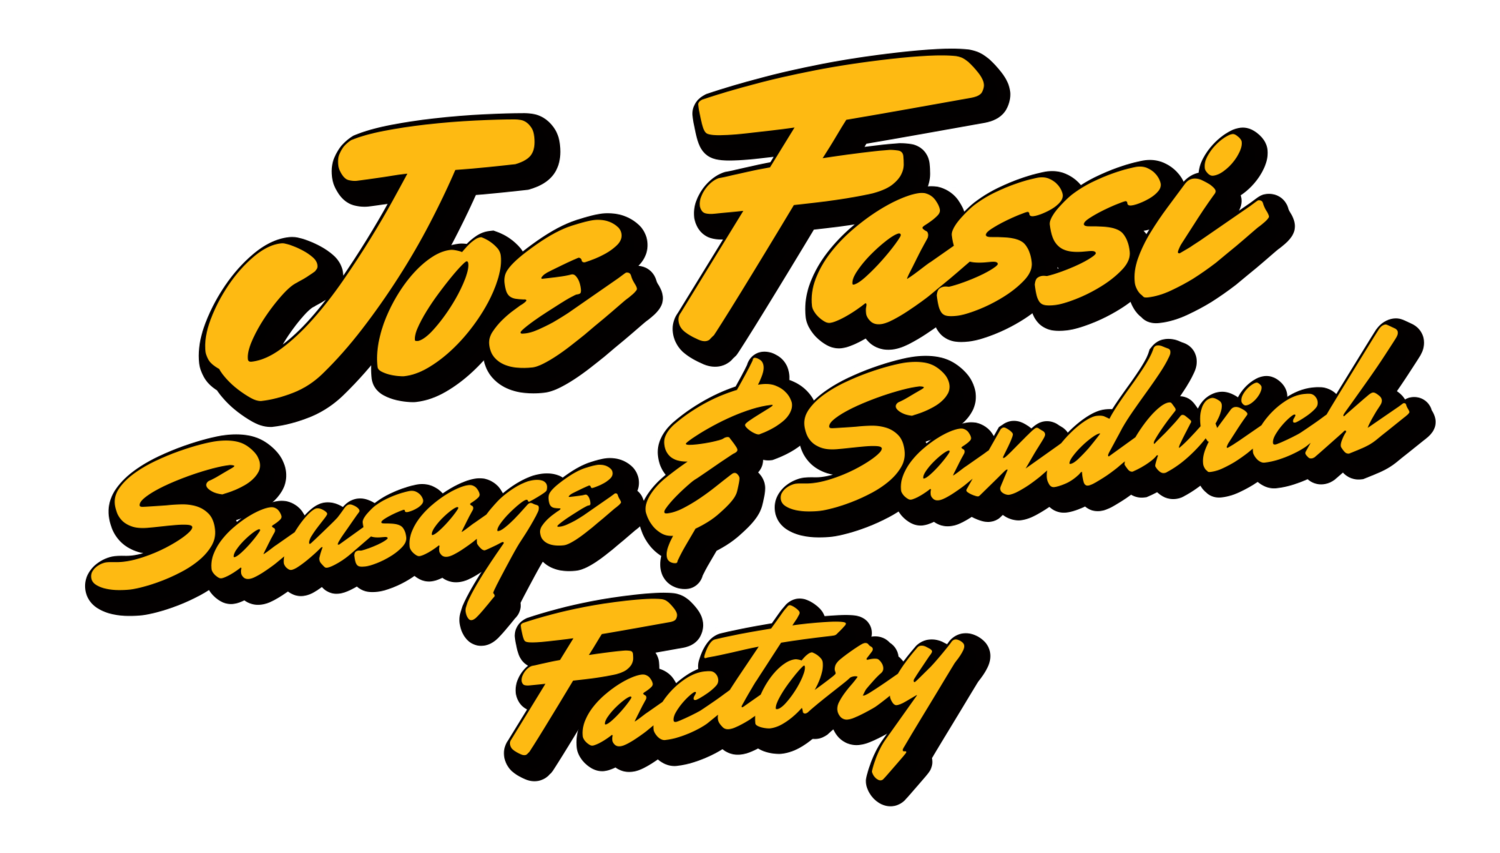 www.joefassisandwiches.com